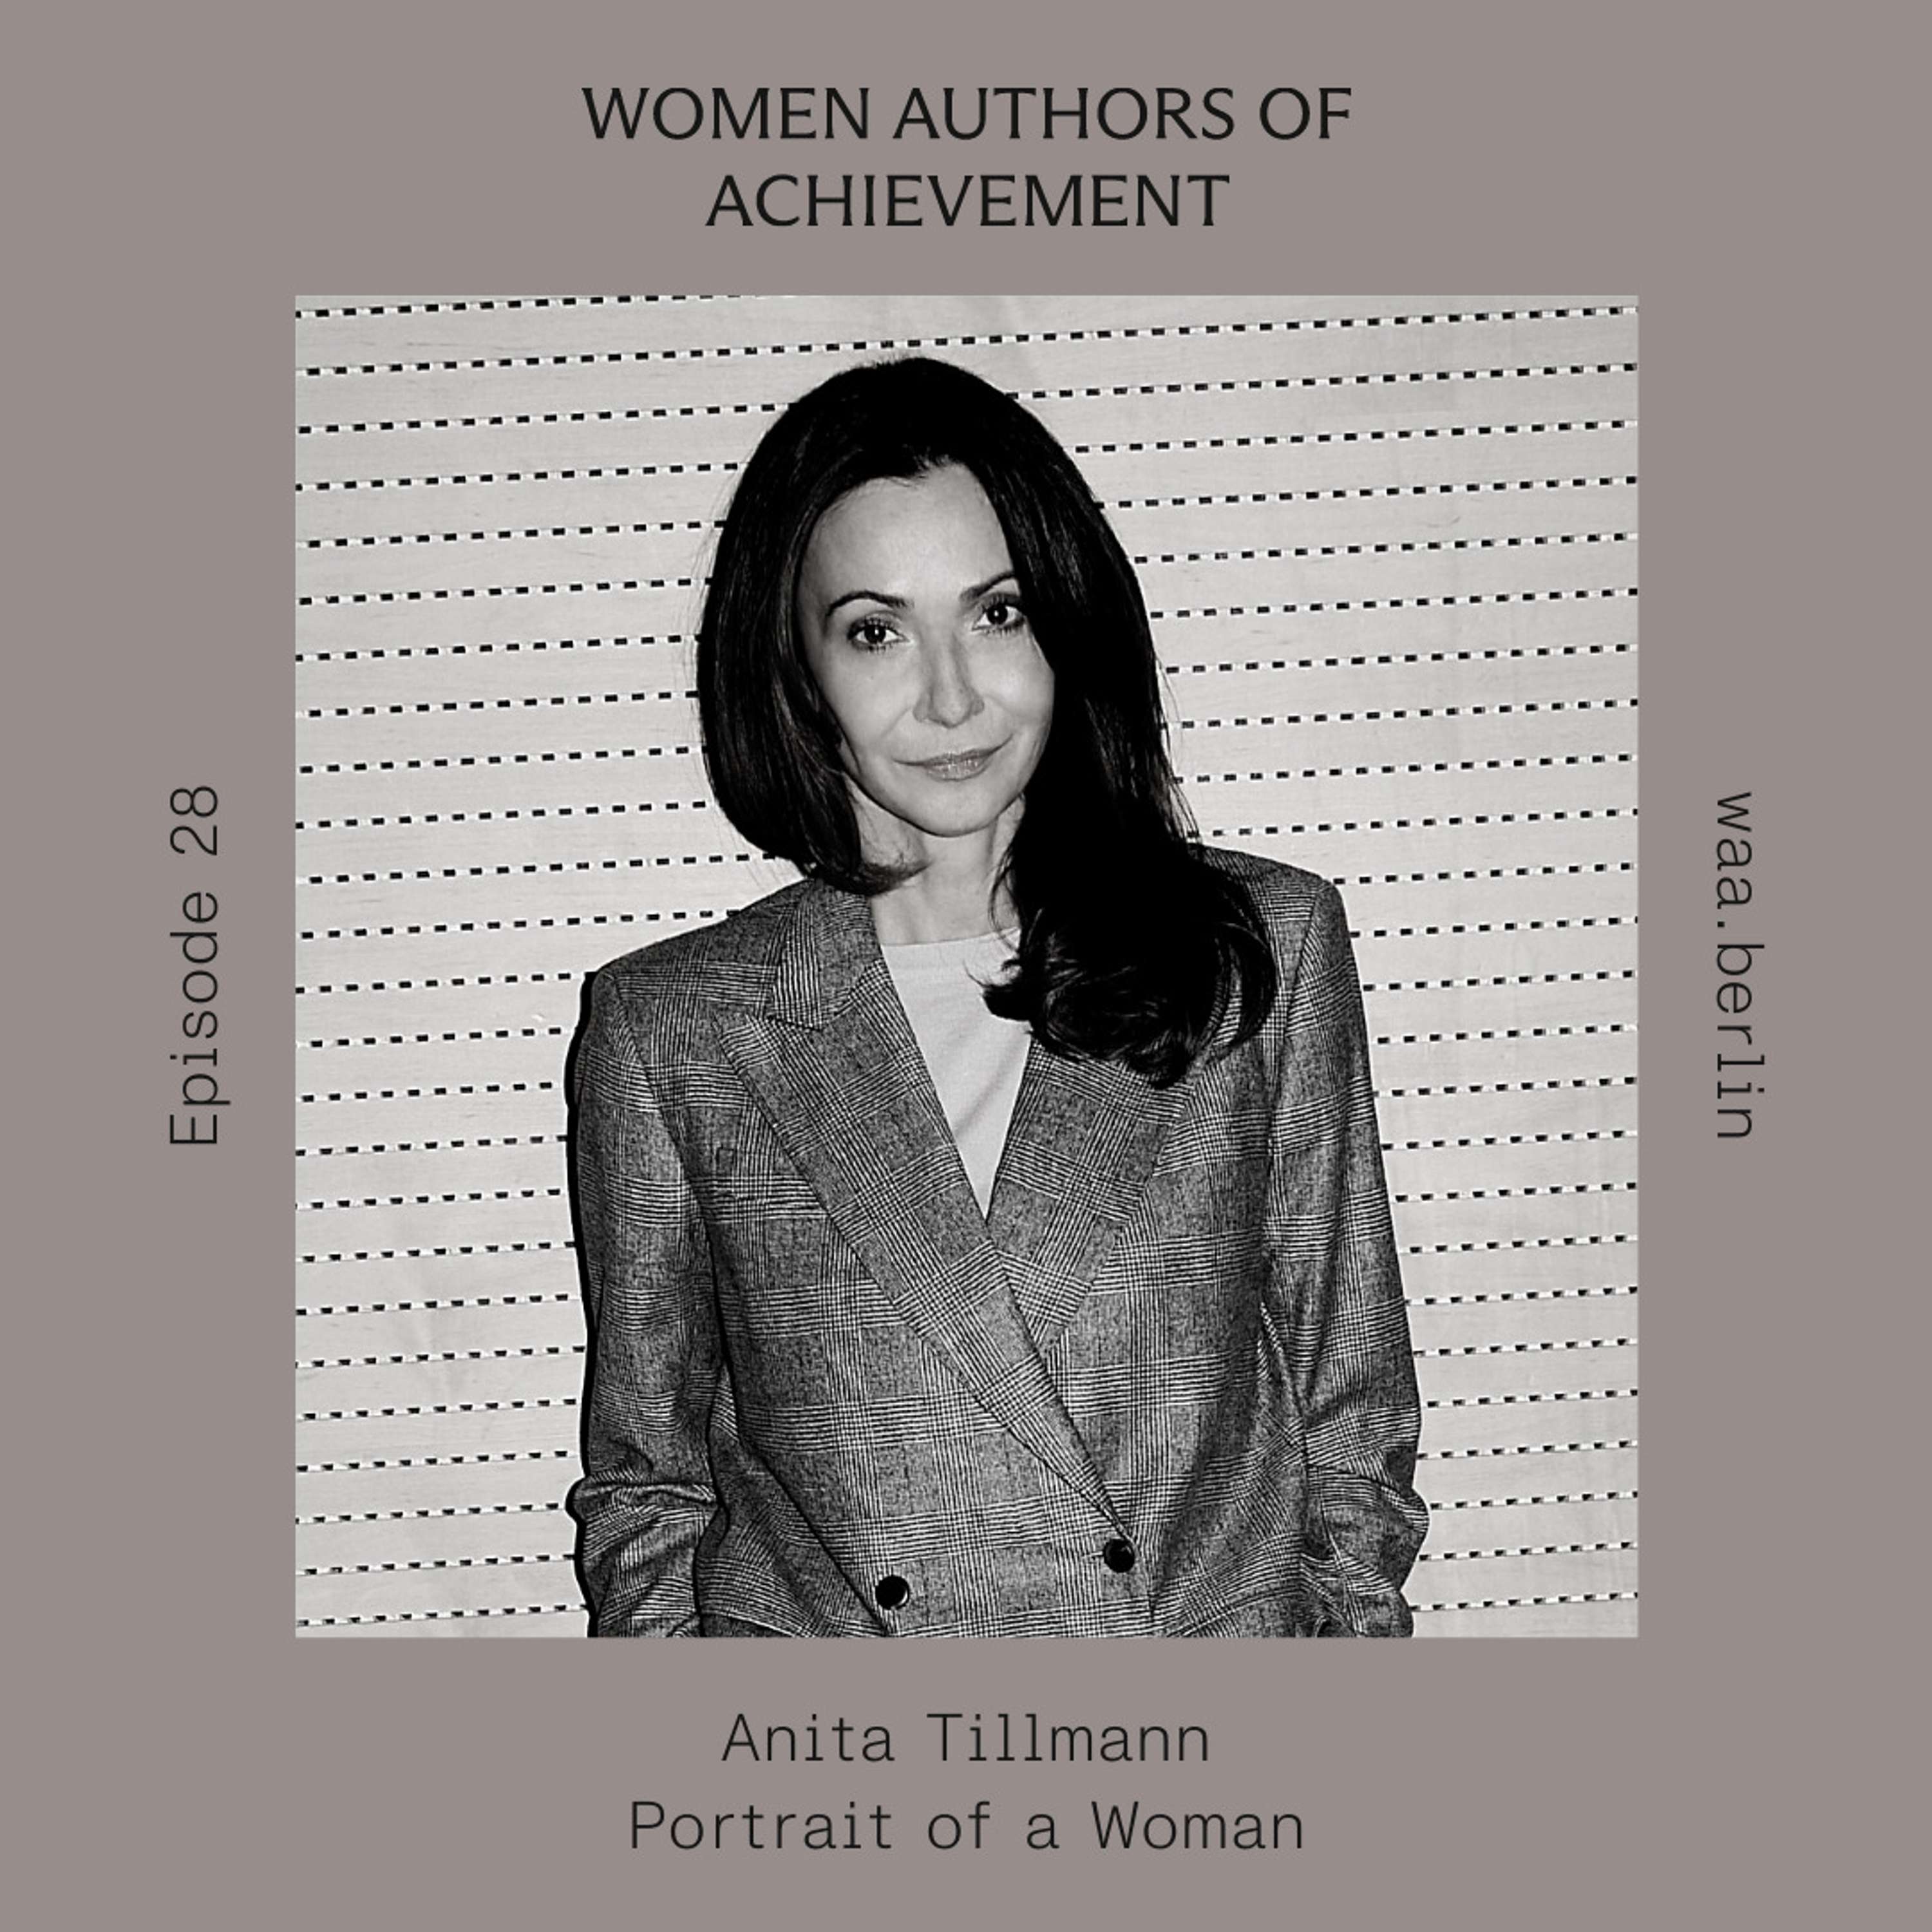 E.28 Challenging fashion’s status quo with Anita Tillmann